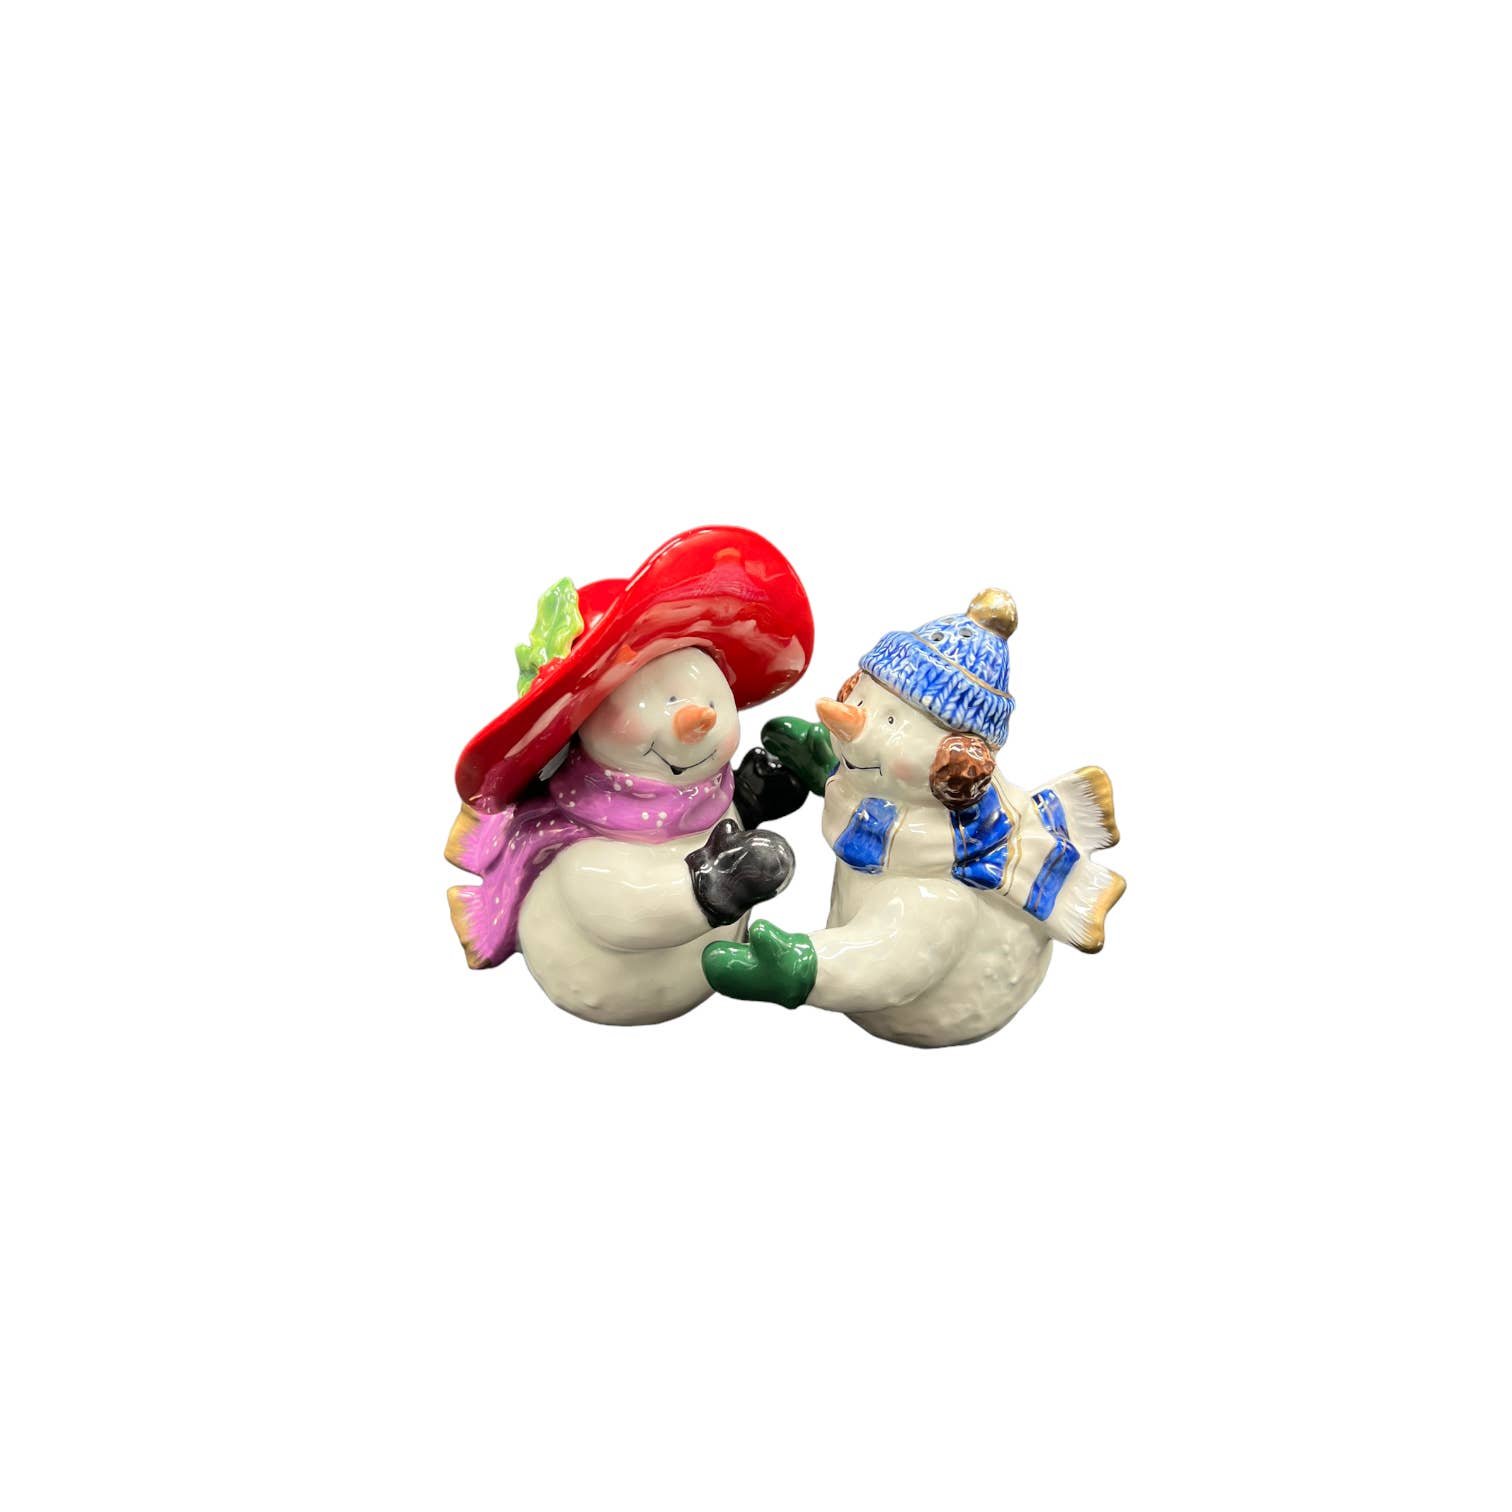 Hugging Snowmen One in Red Hat & One in Blue To Keep Your Salt & Pepper Fun NnLuRE2lJ